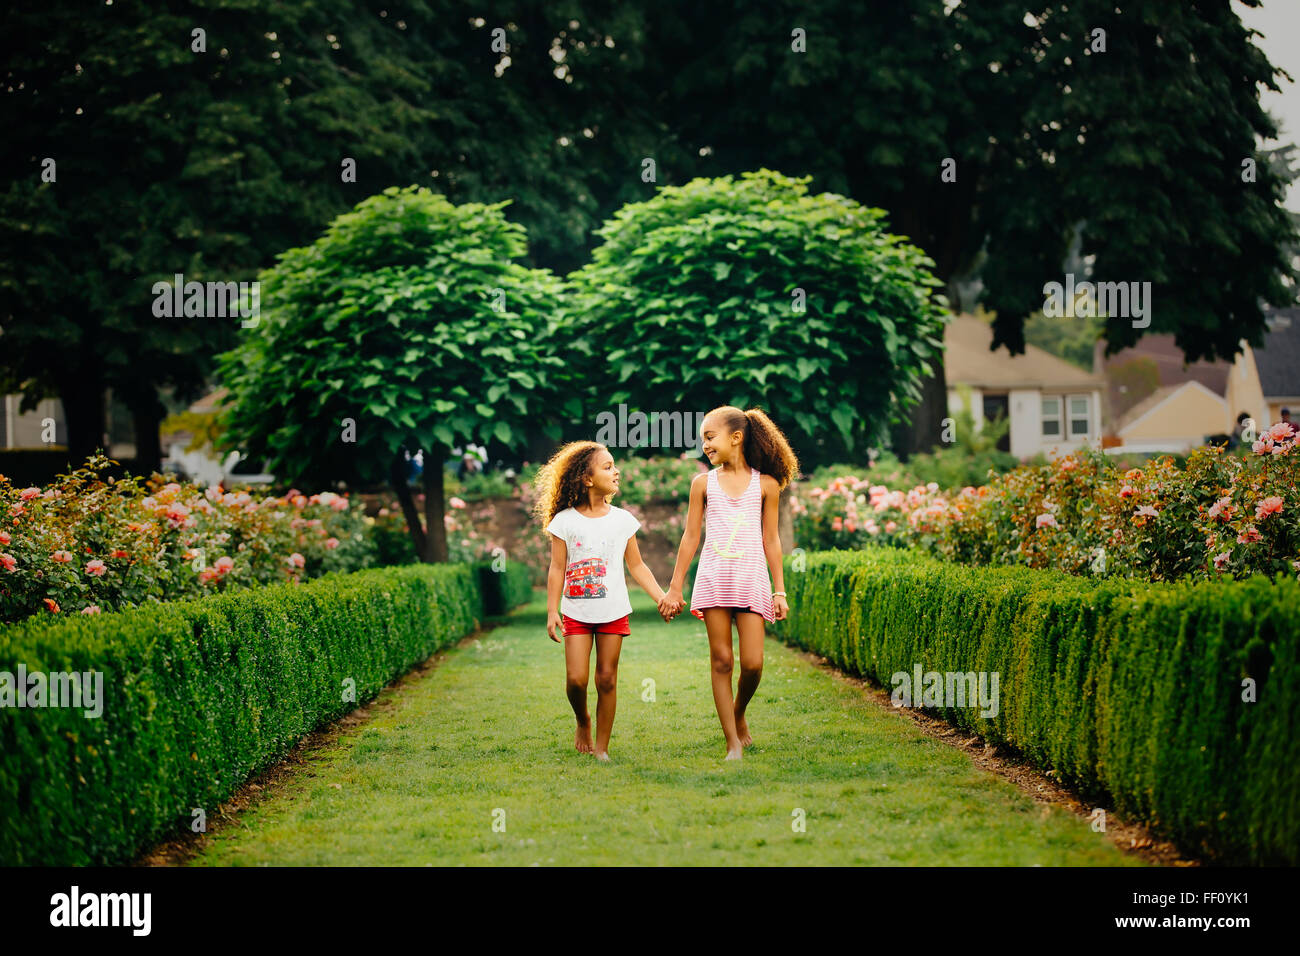 Mixed Race girl walking in garden Banque D'Images